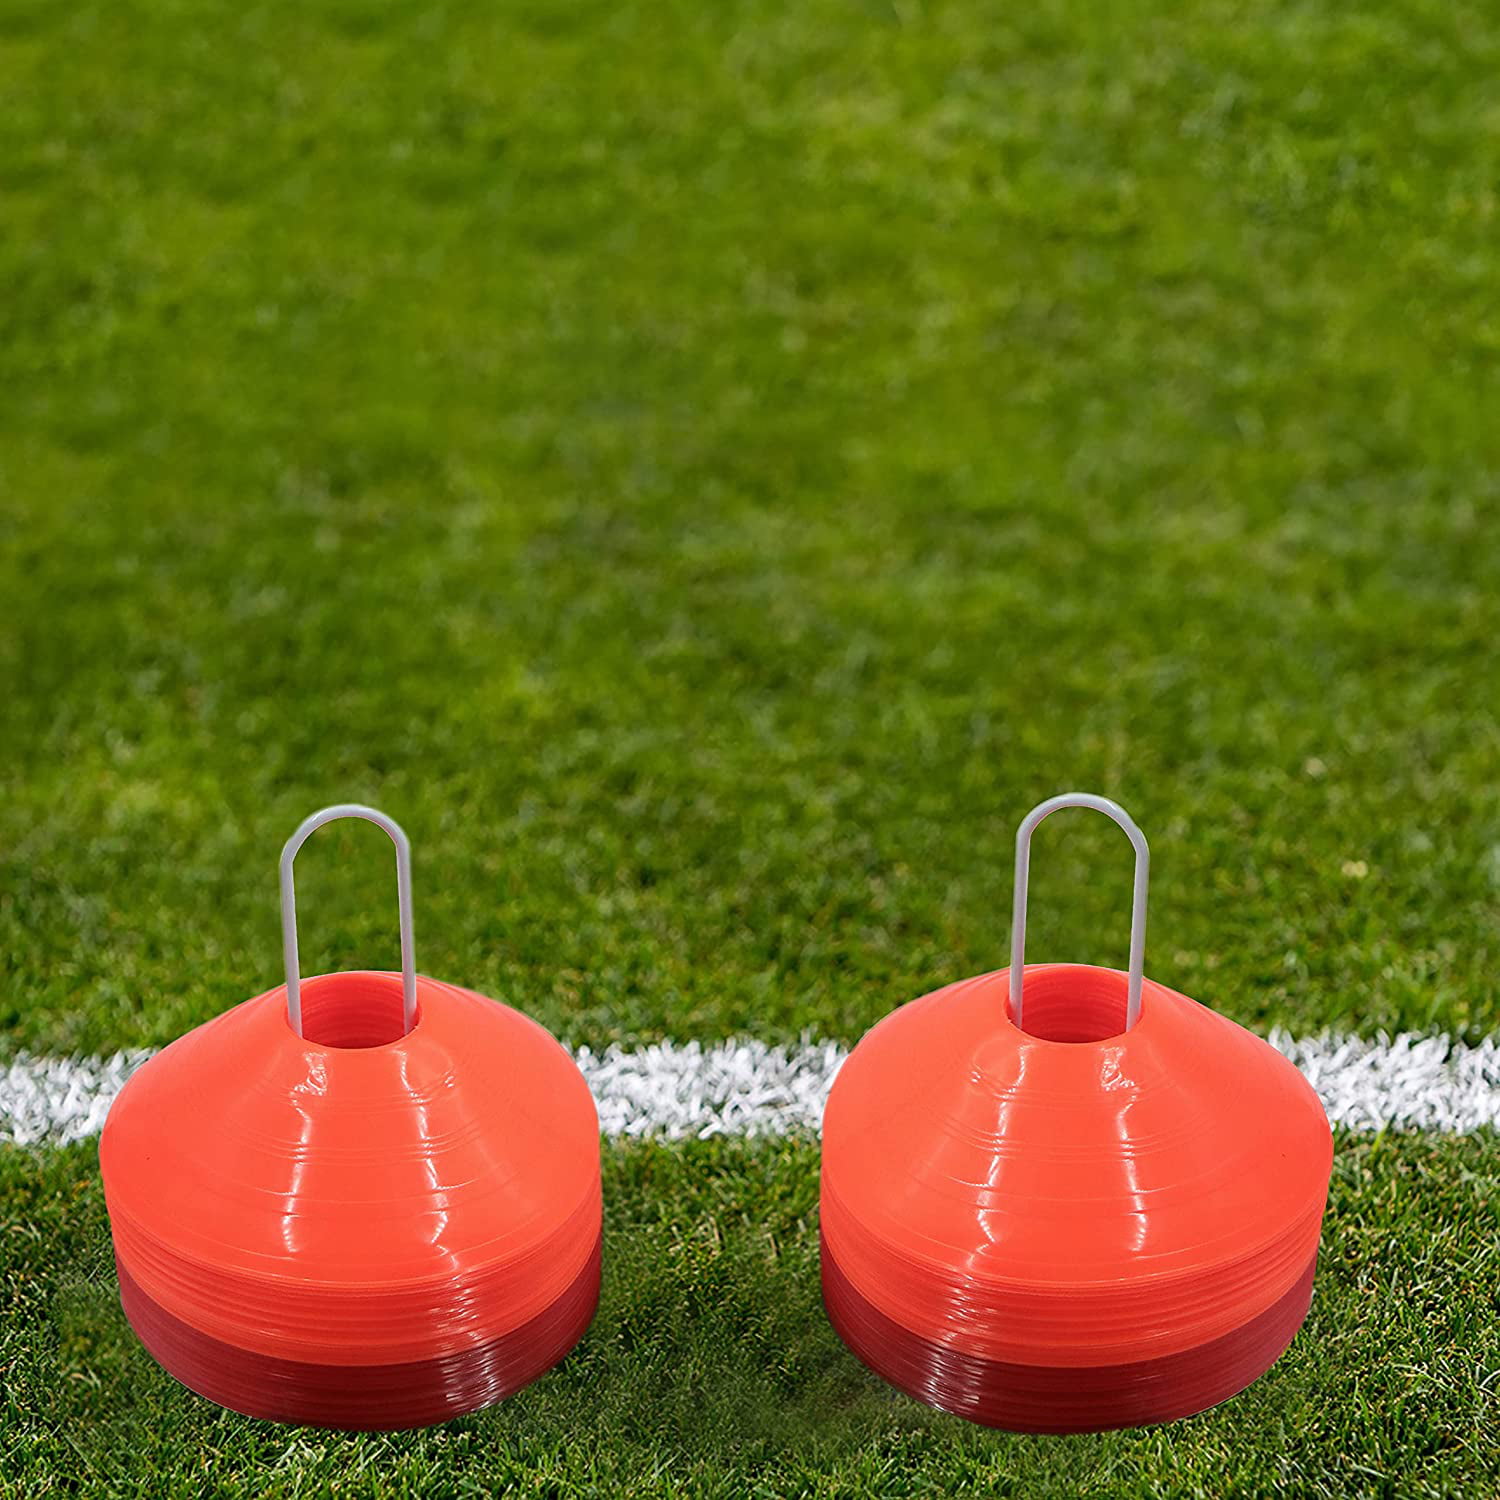 5x Multicoloured Training Cones Marker Discs Sports Running outdoor Accessories 